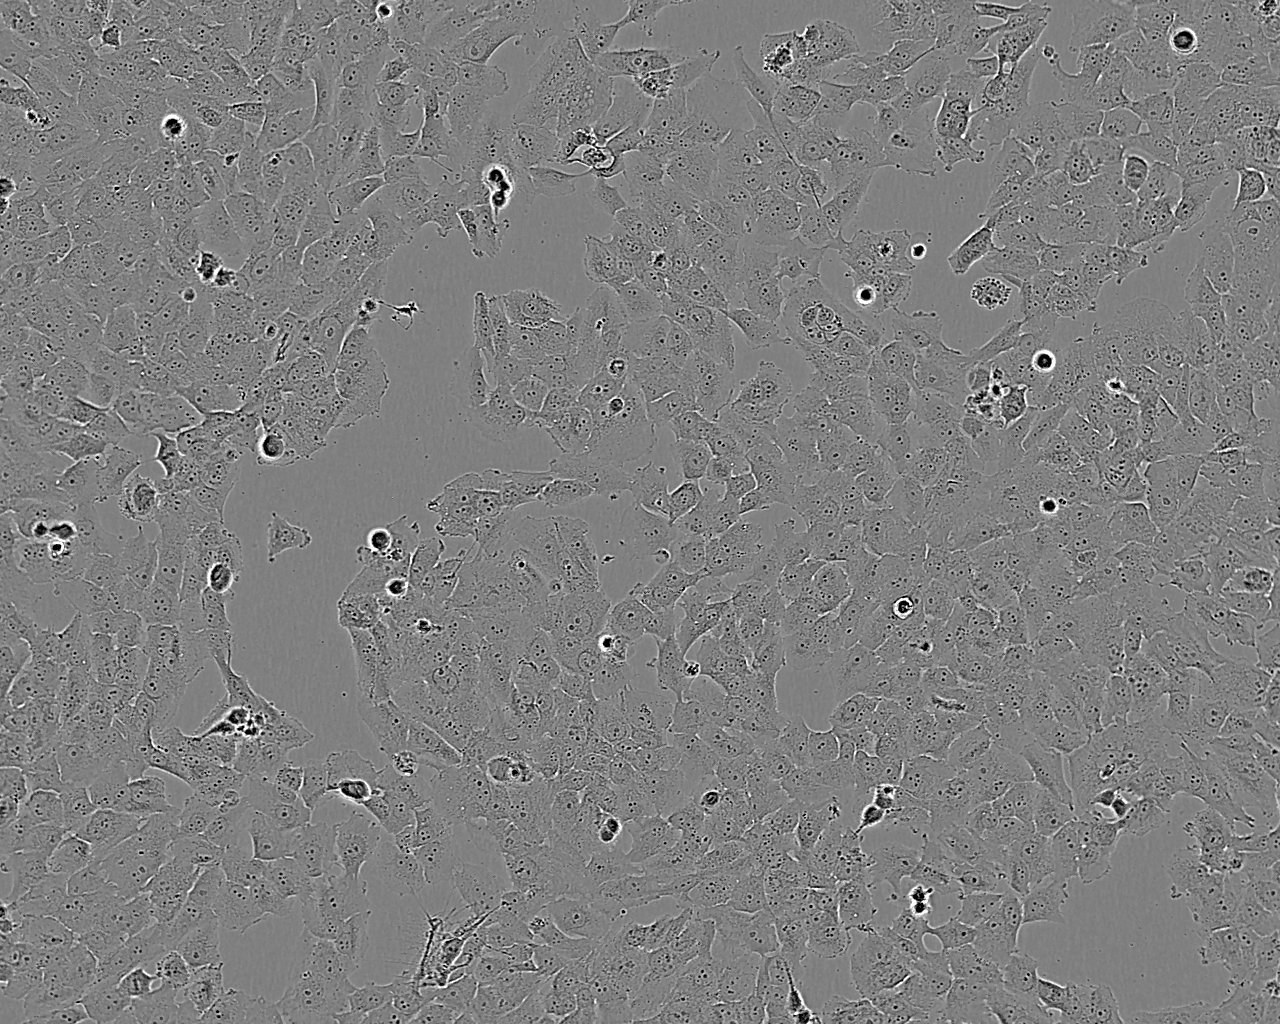 MS1 epithelioid cells小鼠胰岛内皮细胞系,MS1 epithelioid cells